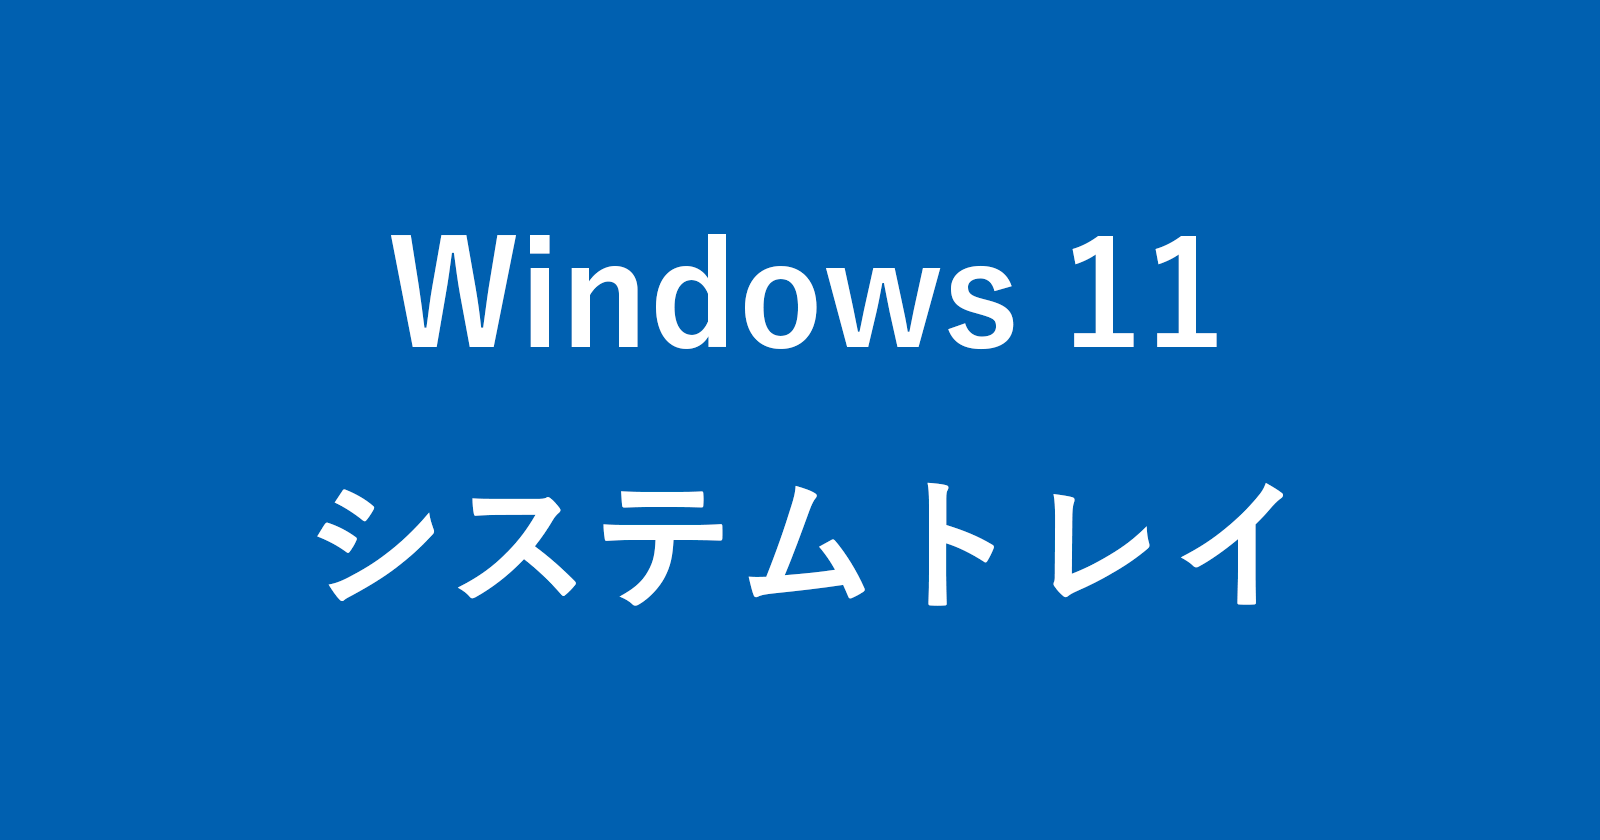 windows 11 system tray icon